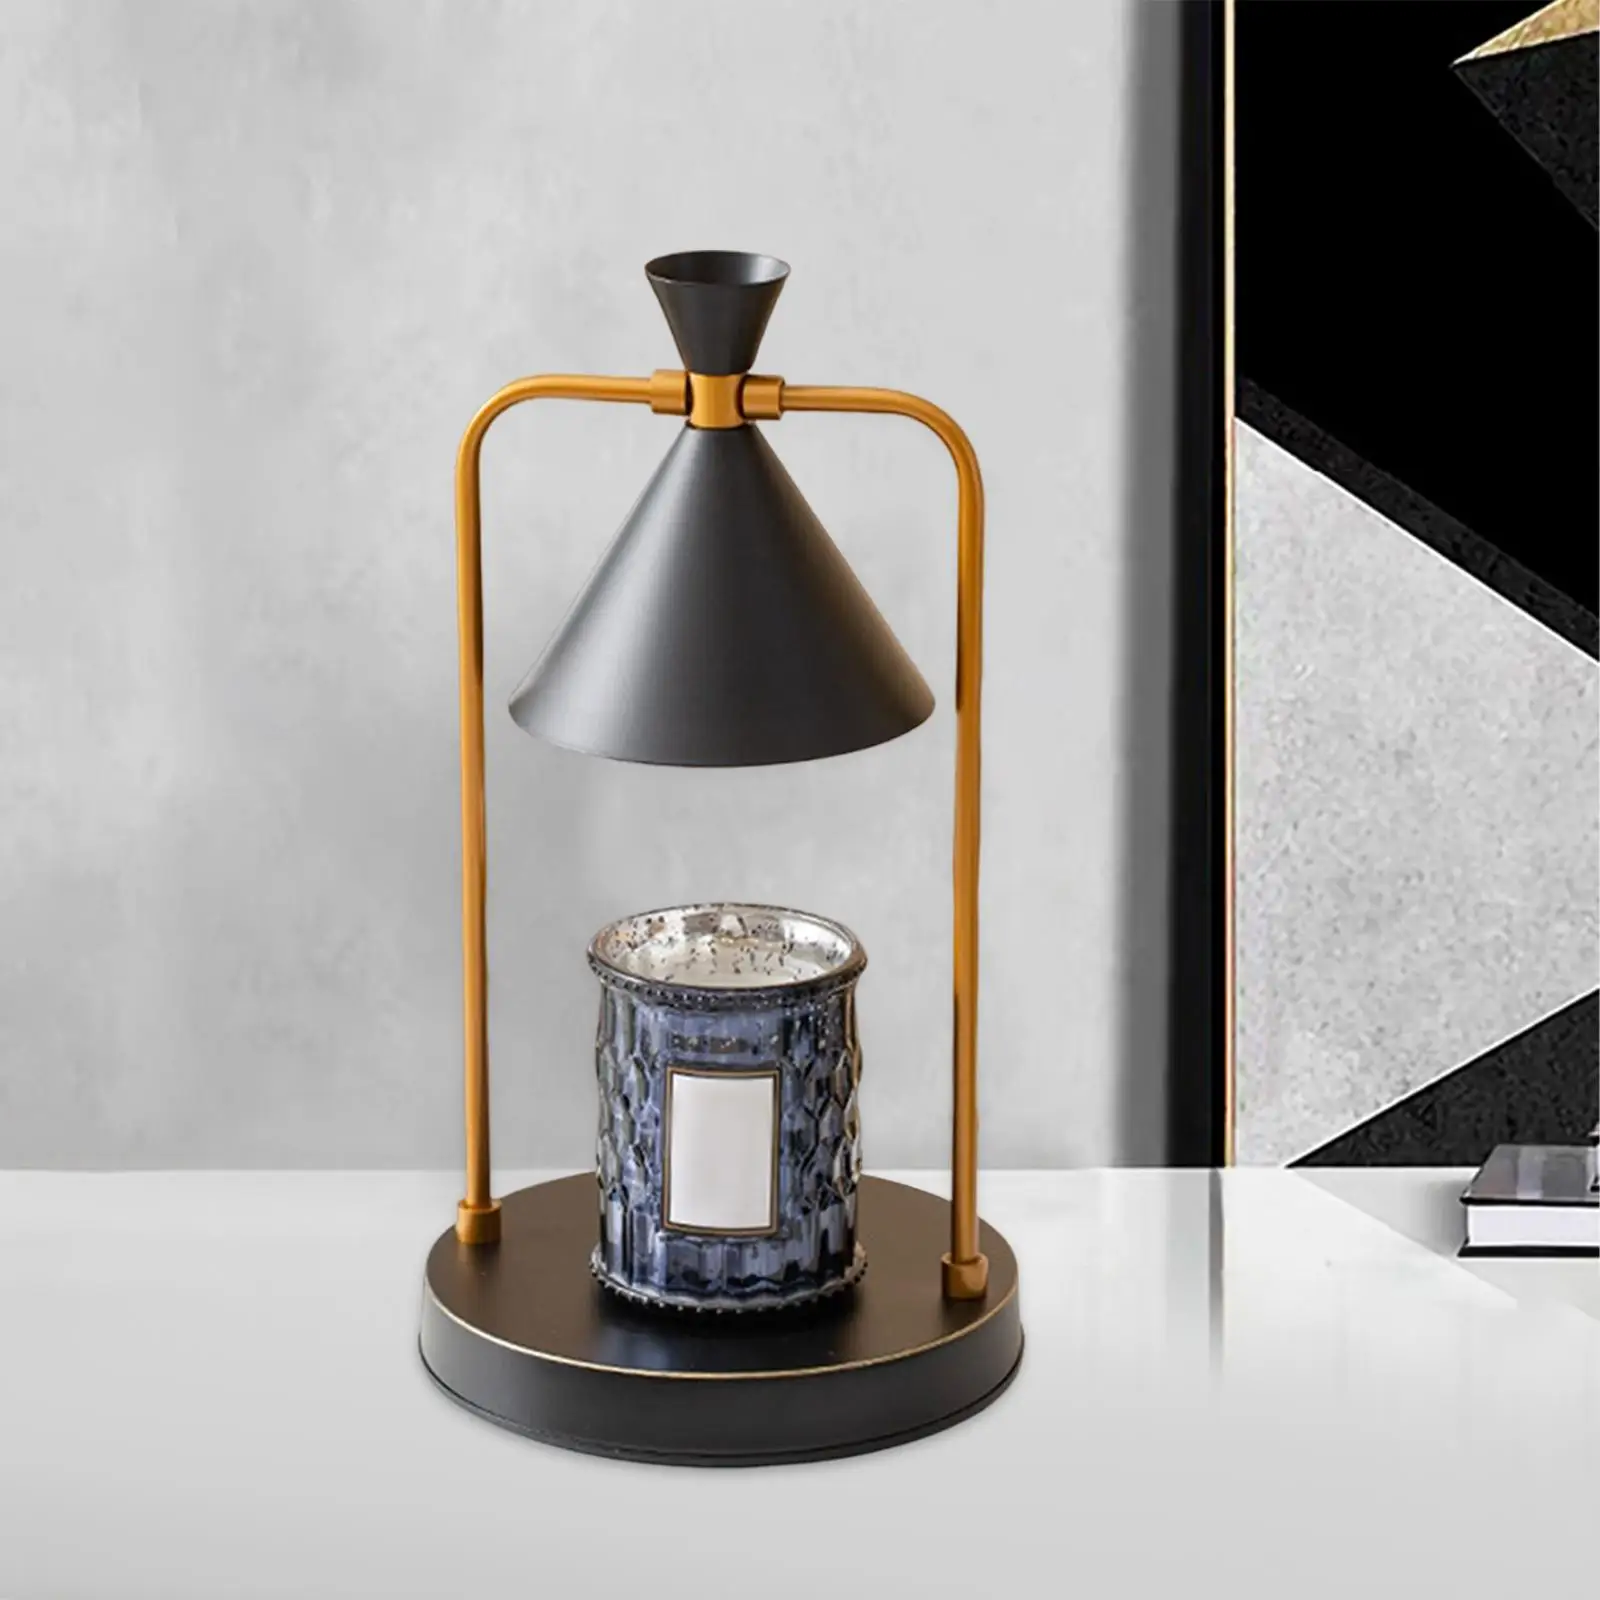 Electric Candle Warmer Lamp Wax Melt Desktop Modern Heater Candle Holder Melter for Home Fragrance Bedroom Wedding Beside Decor